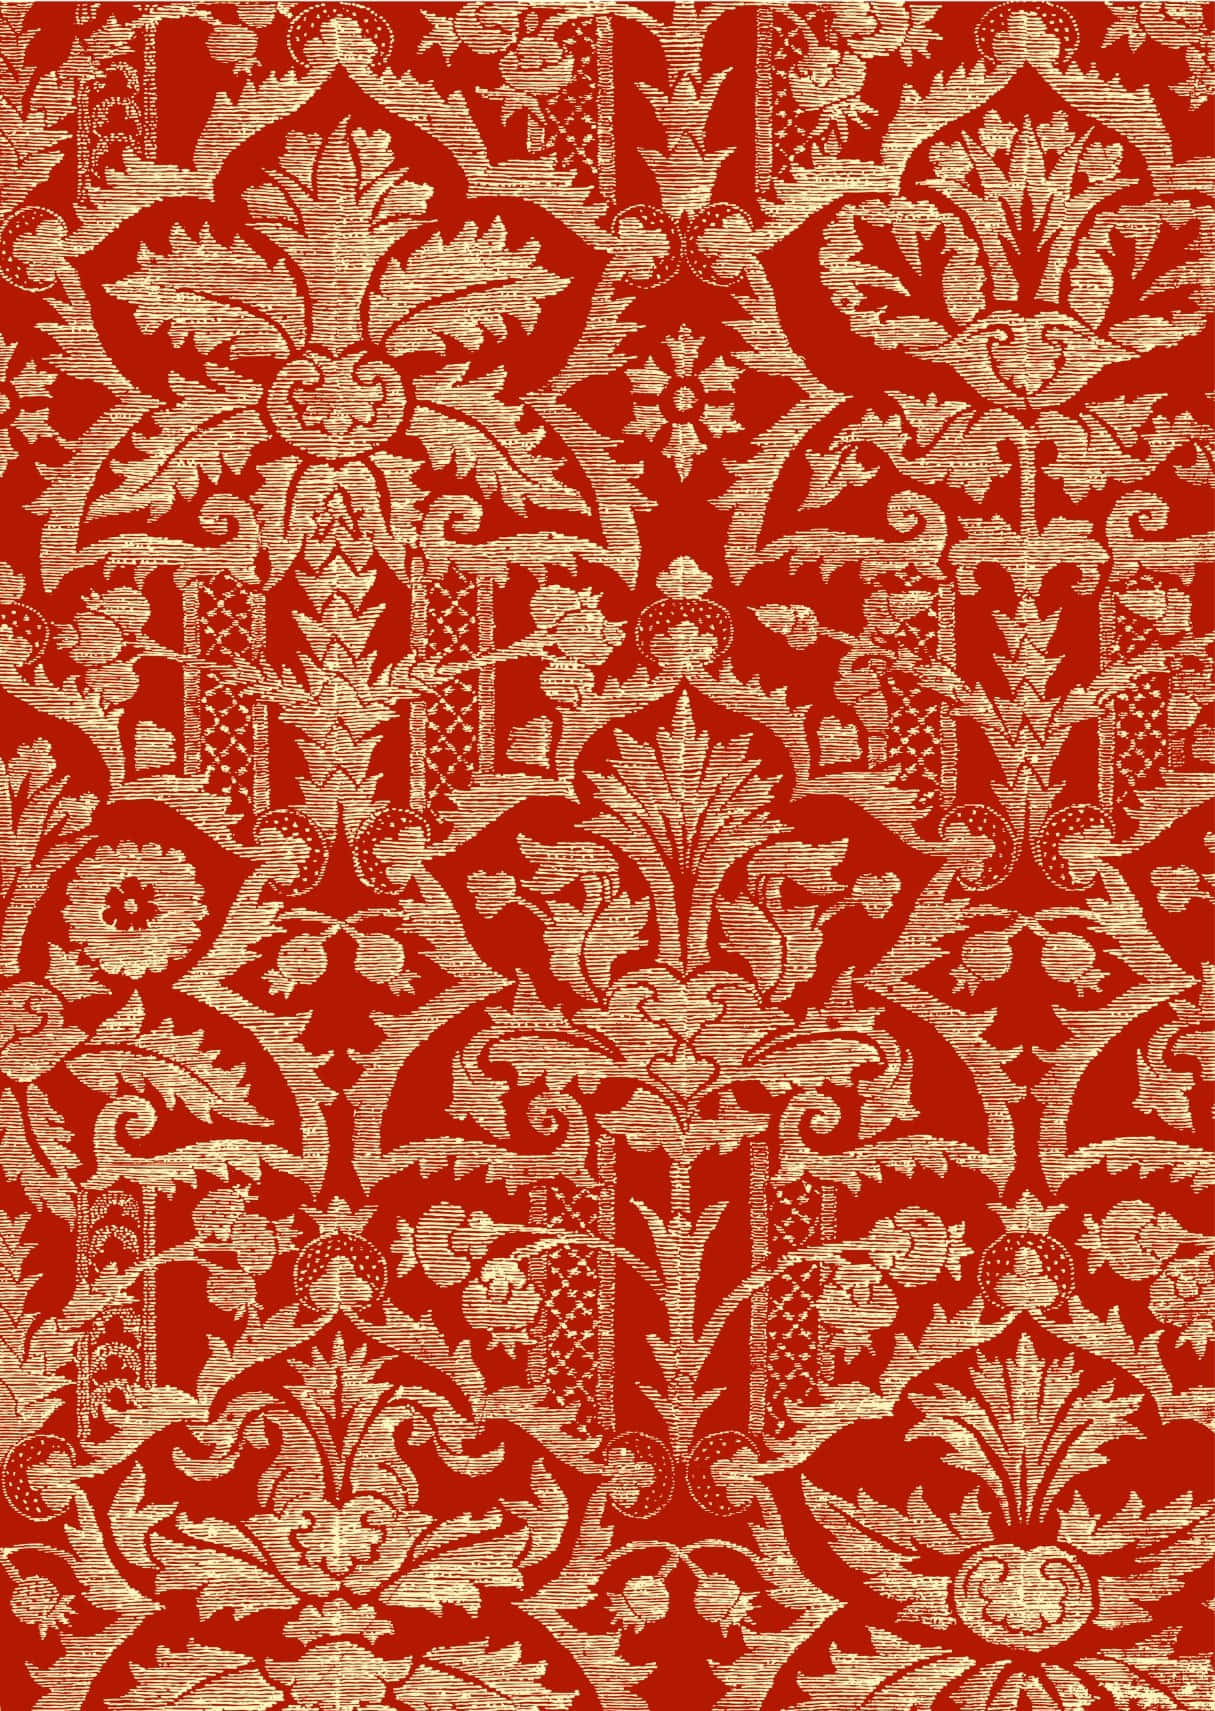 Red Gold Damask Pattern Texture Wallpaper